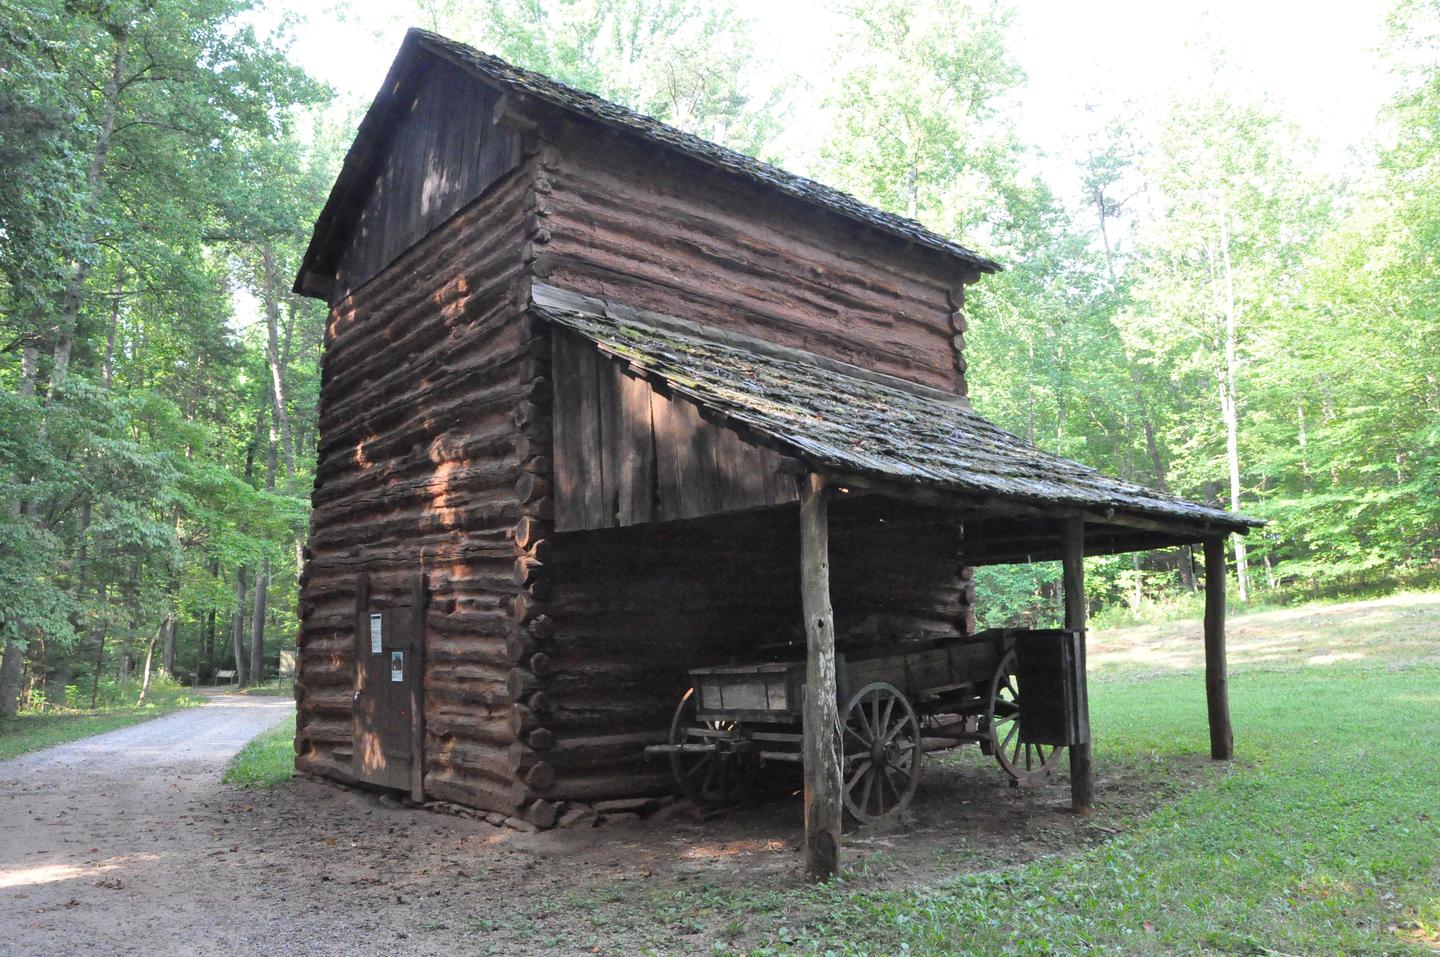 Tobacco barn with wagon